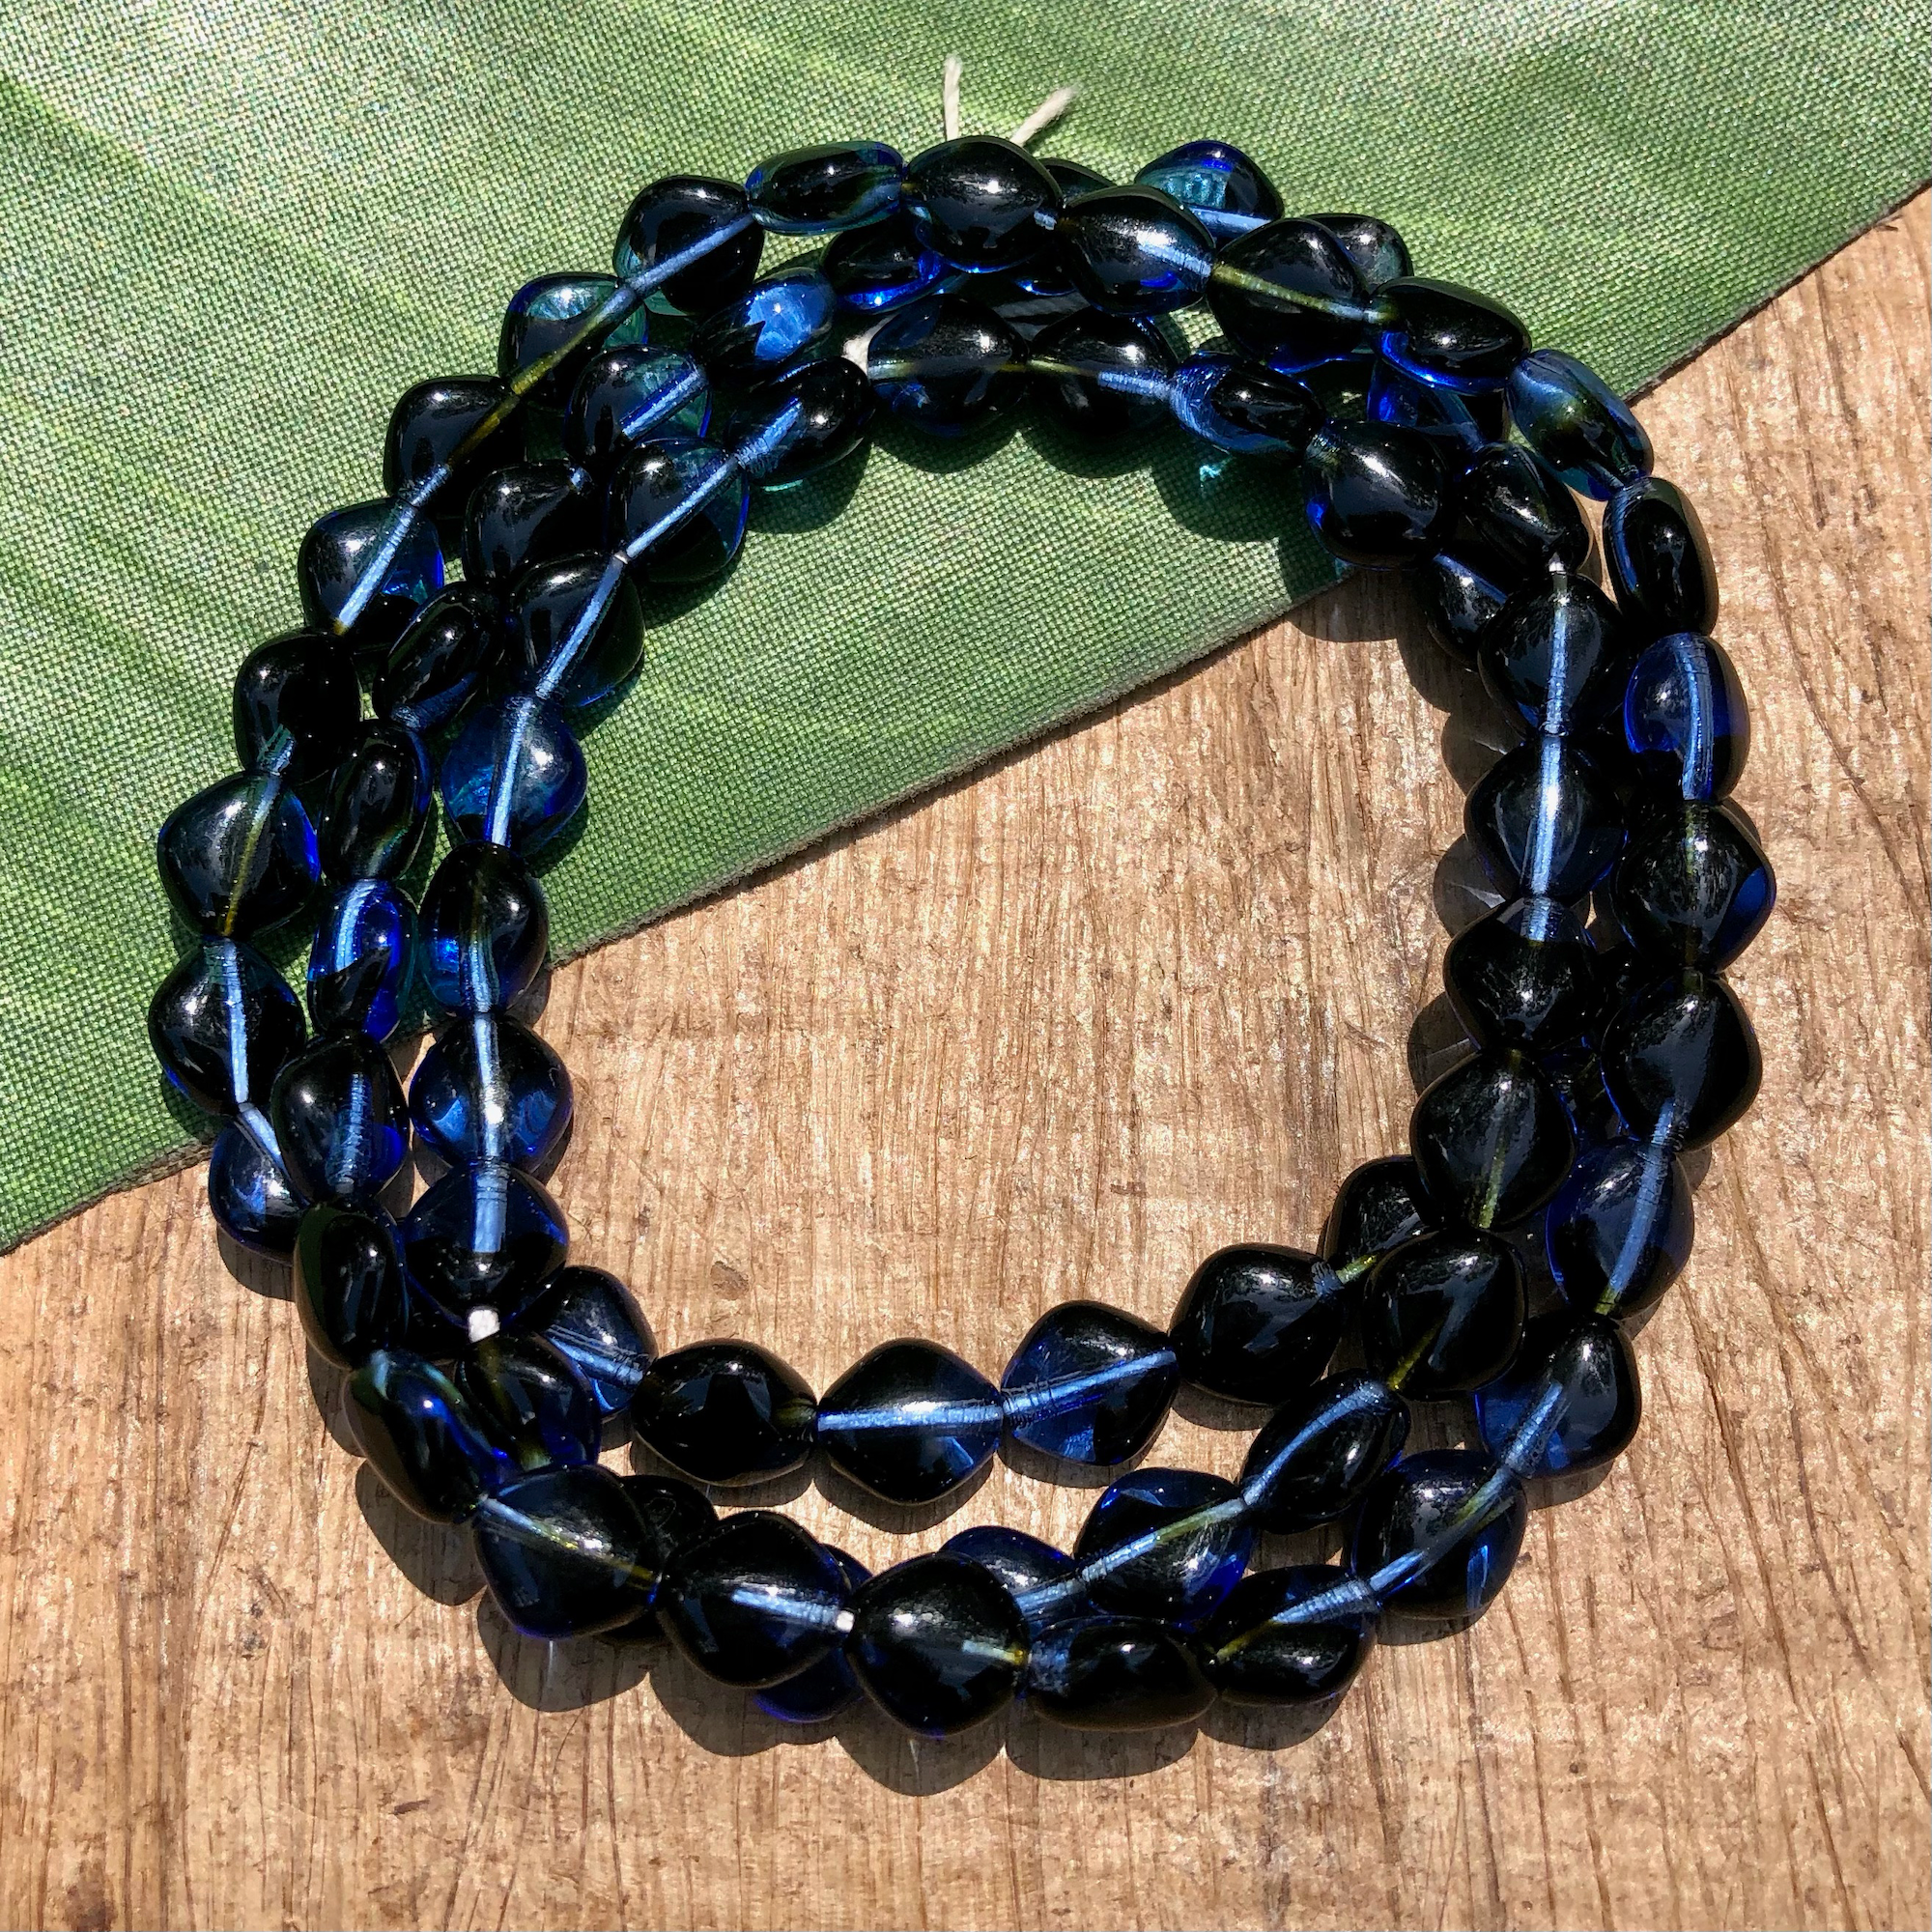 Blue & Black Soft Diamond Beads - 75 Pieces